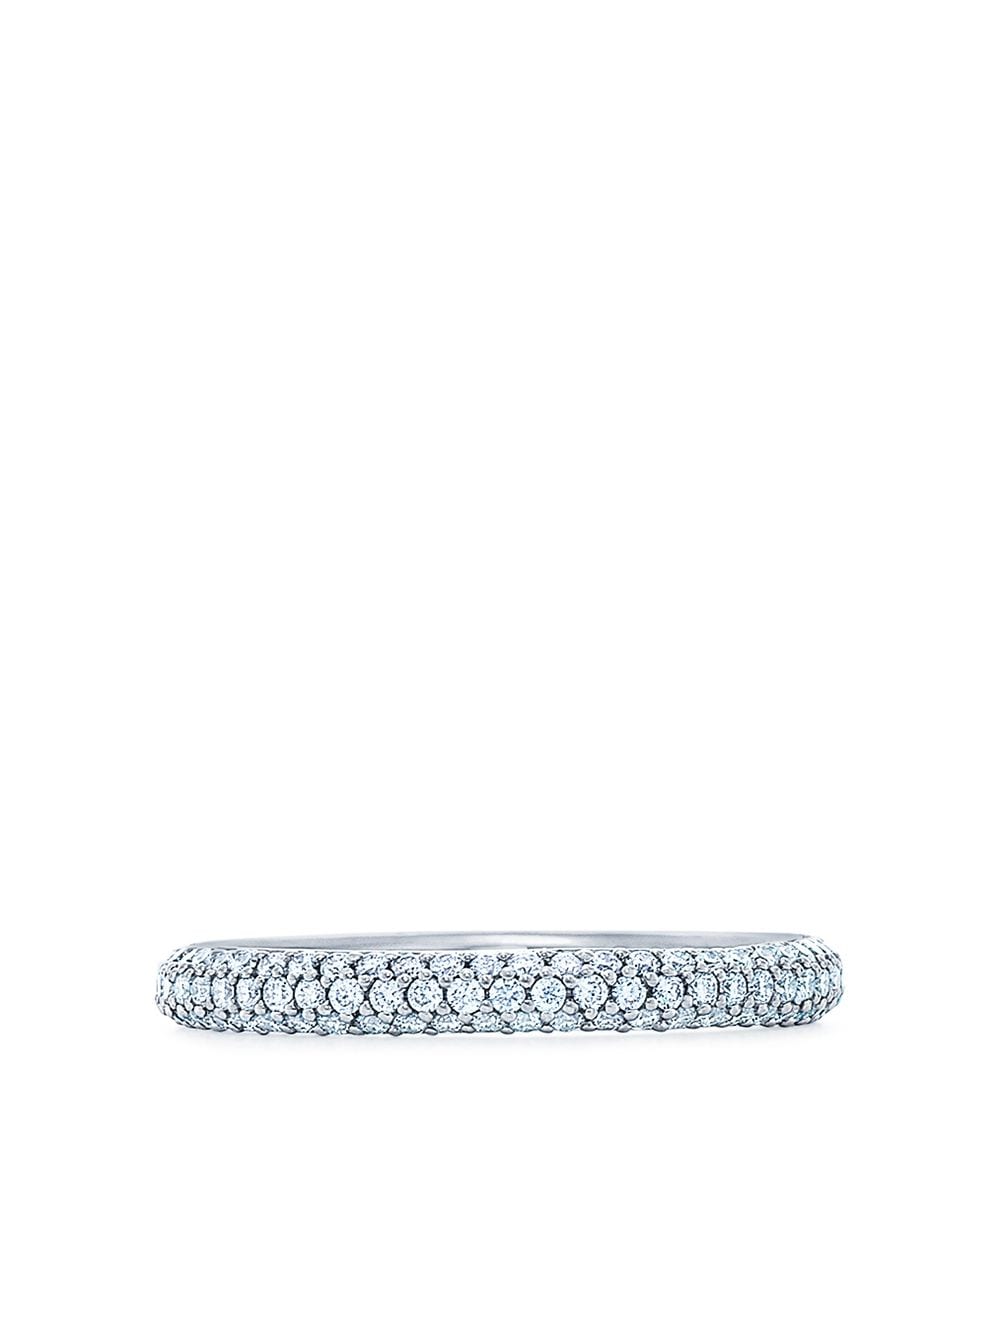 KWIAT 18kt white gold Moonlight 3-row pave diamond ring - Silver von KWIAT